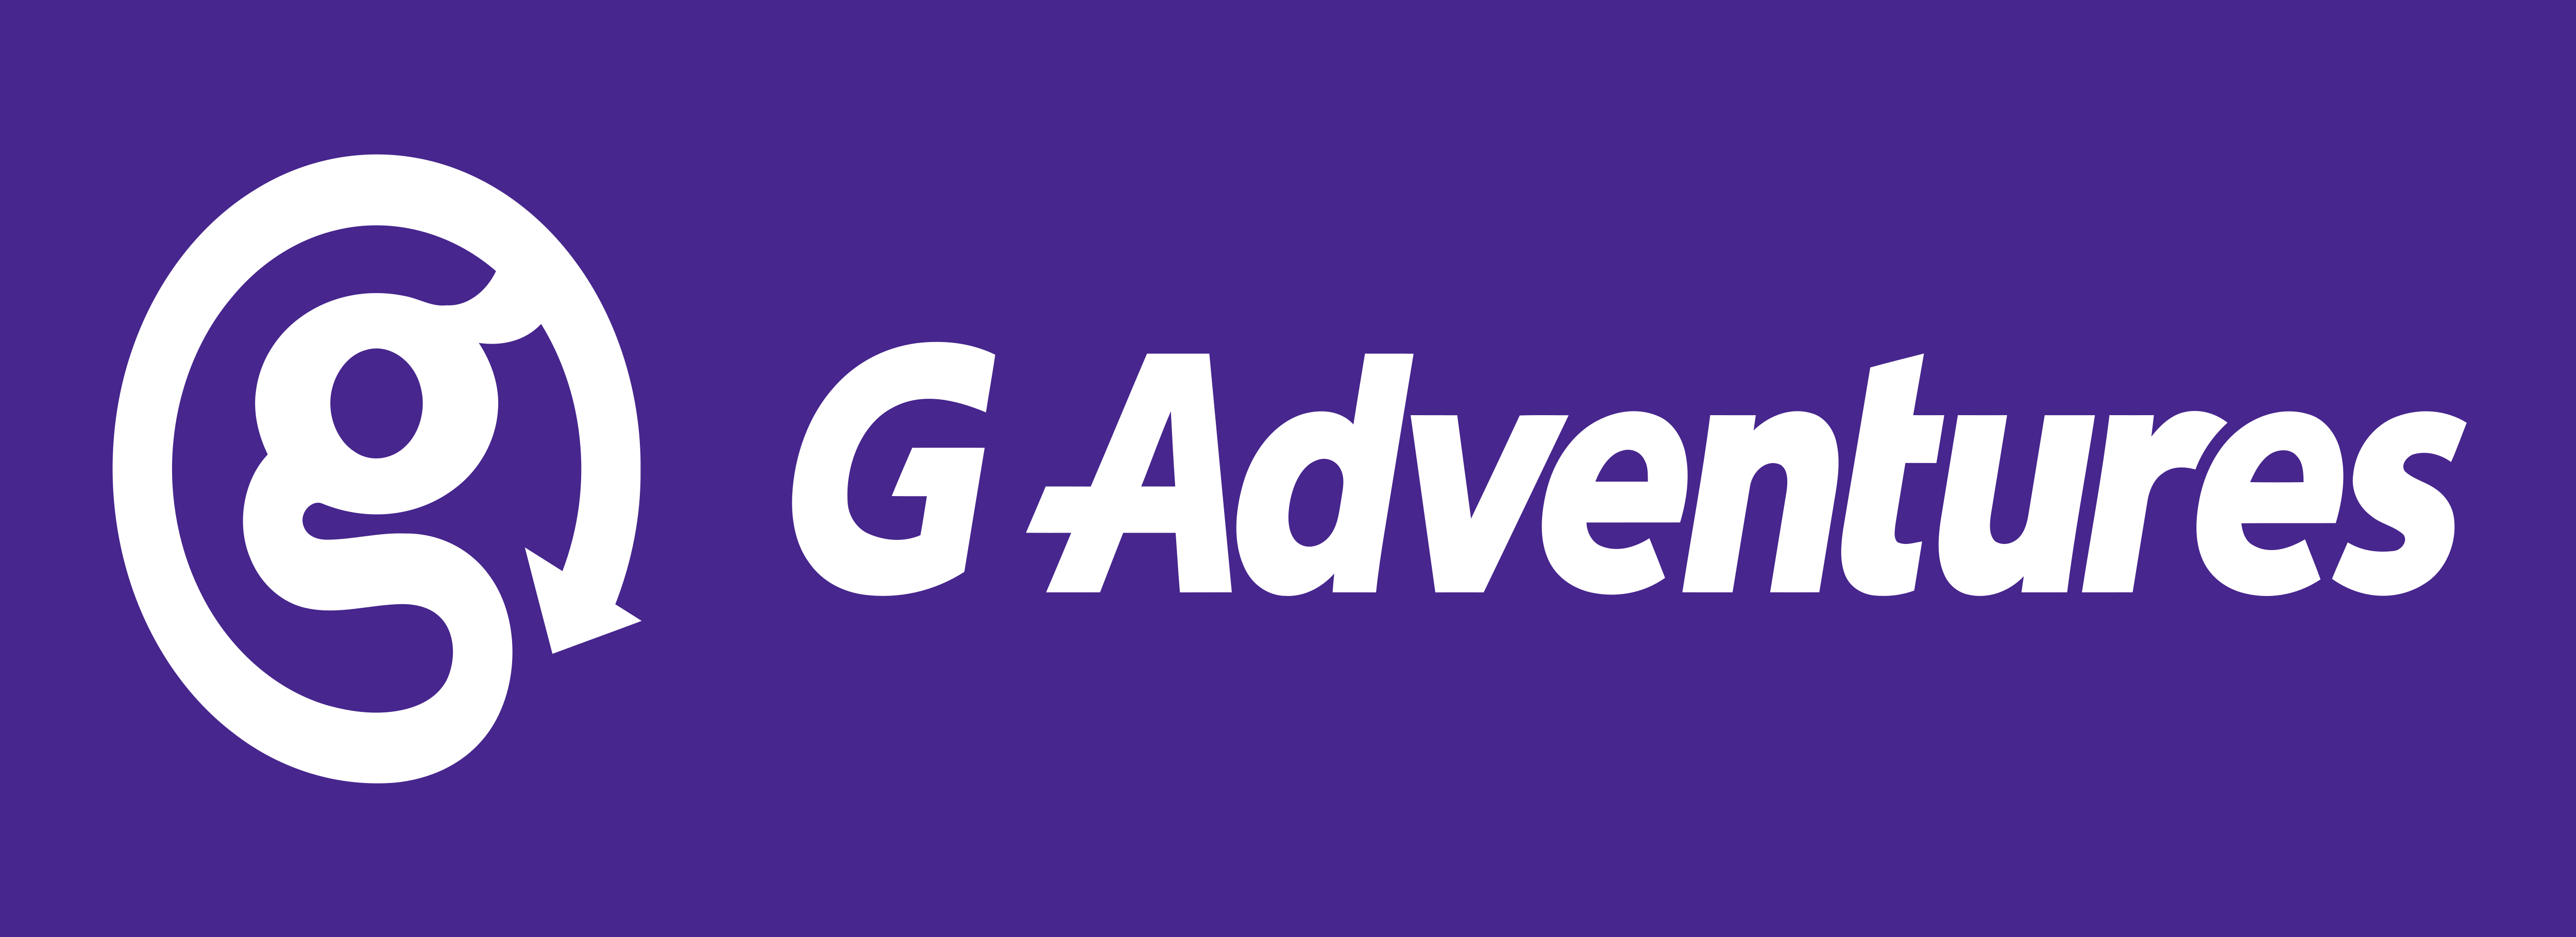 g adventures travel agent site